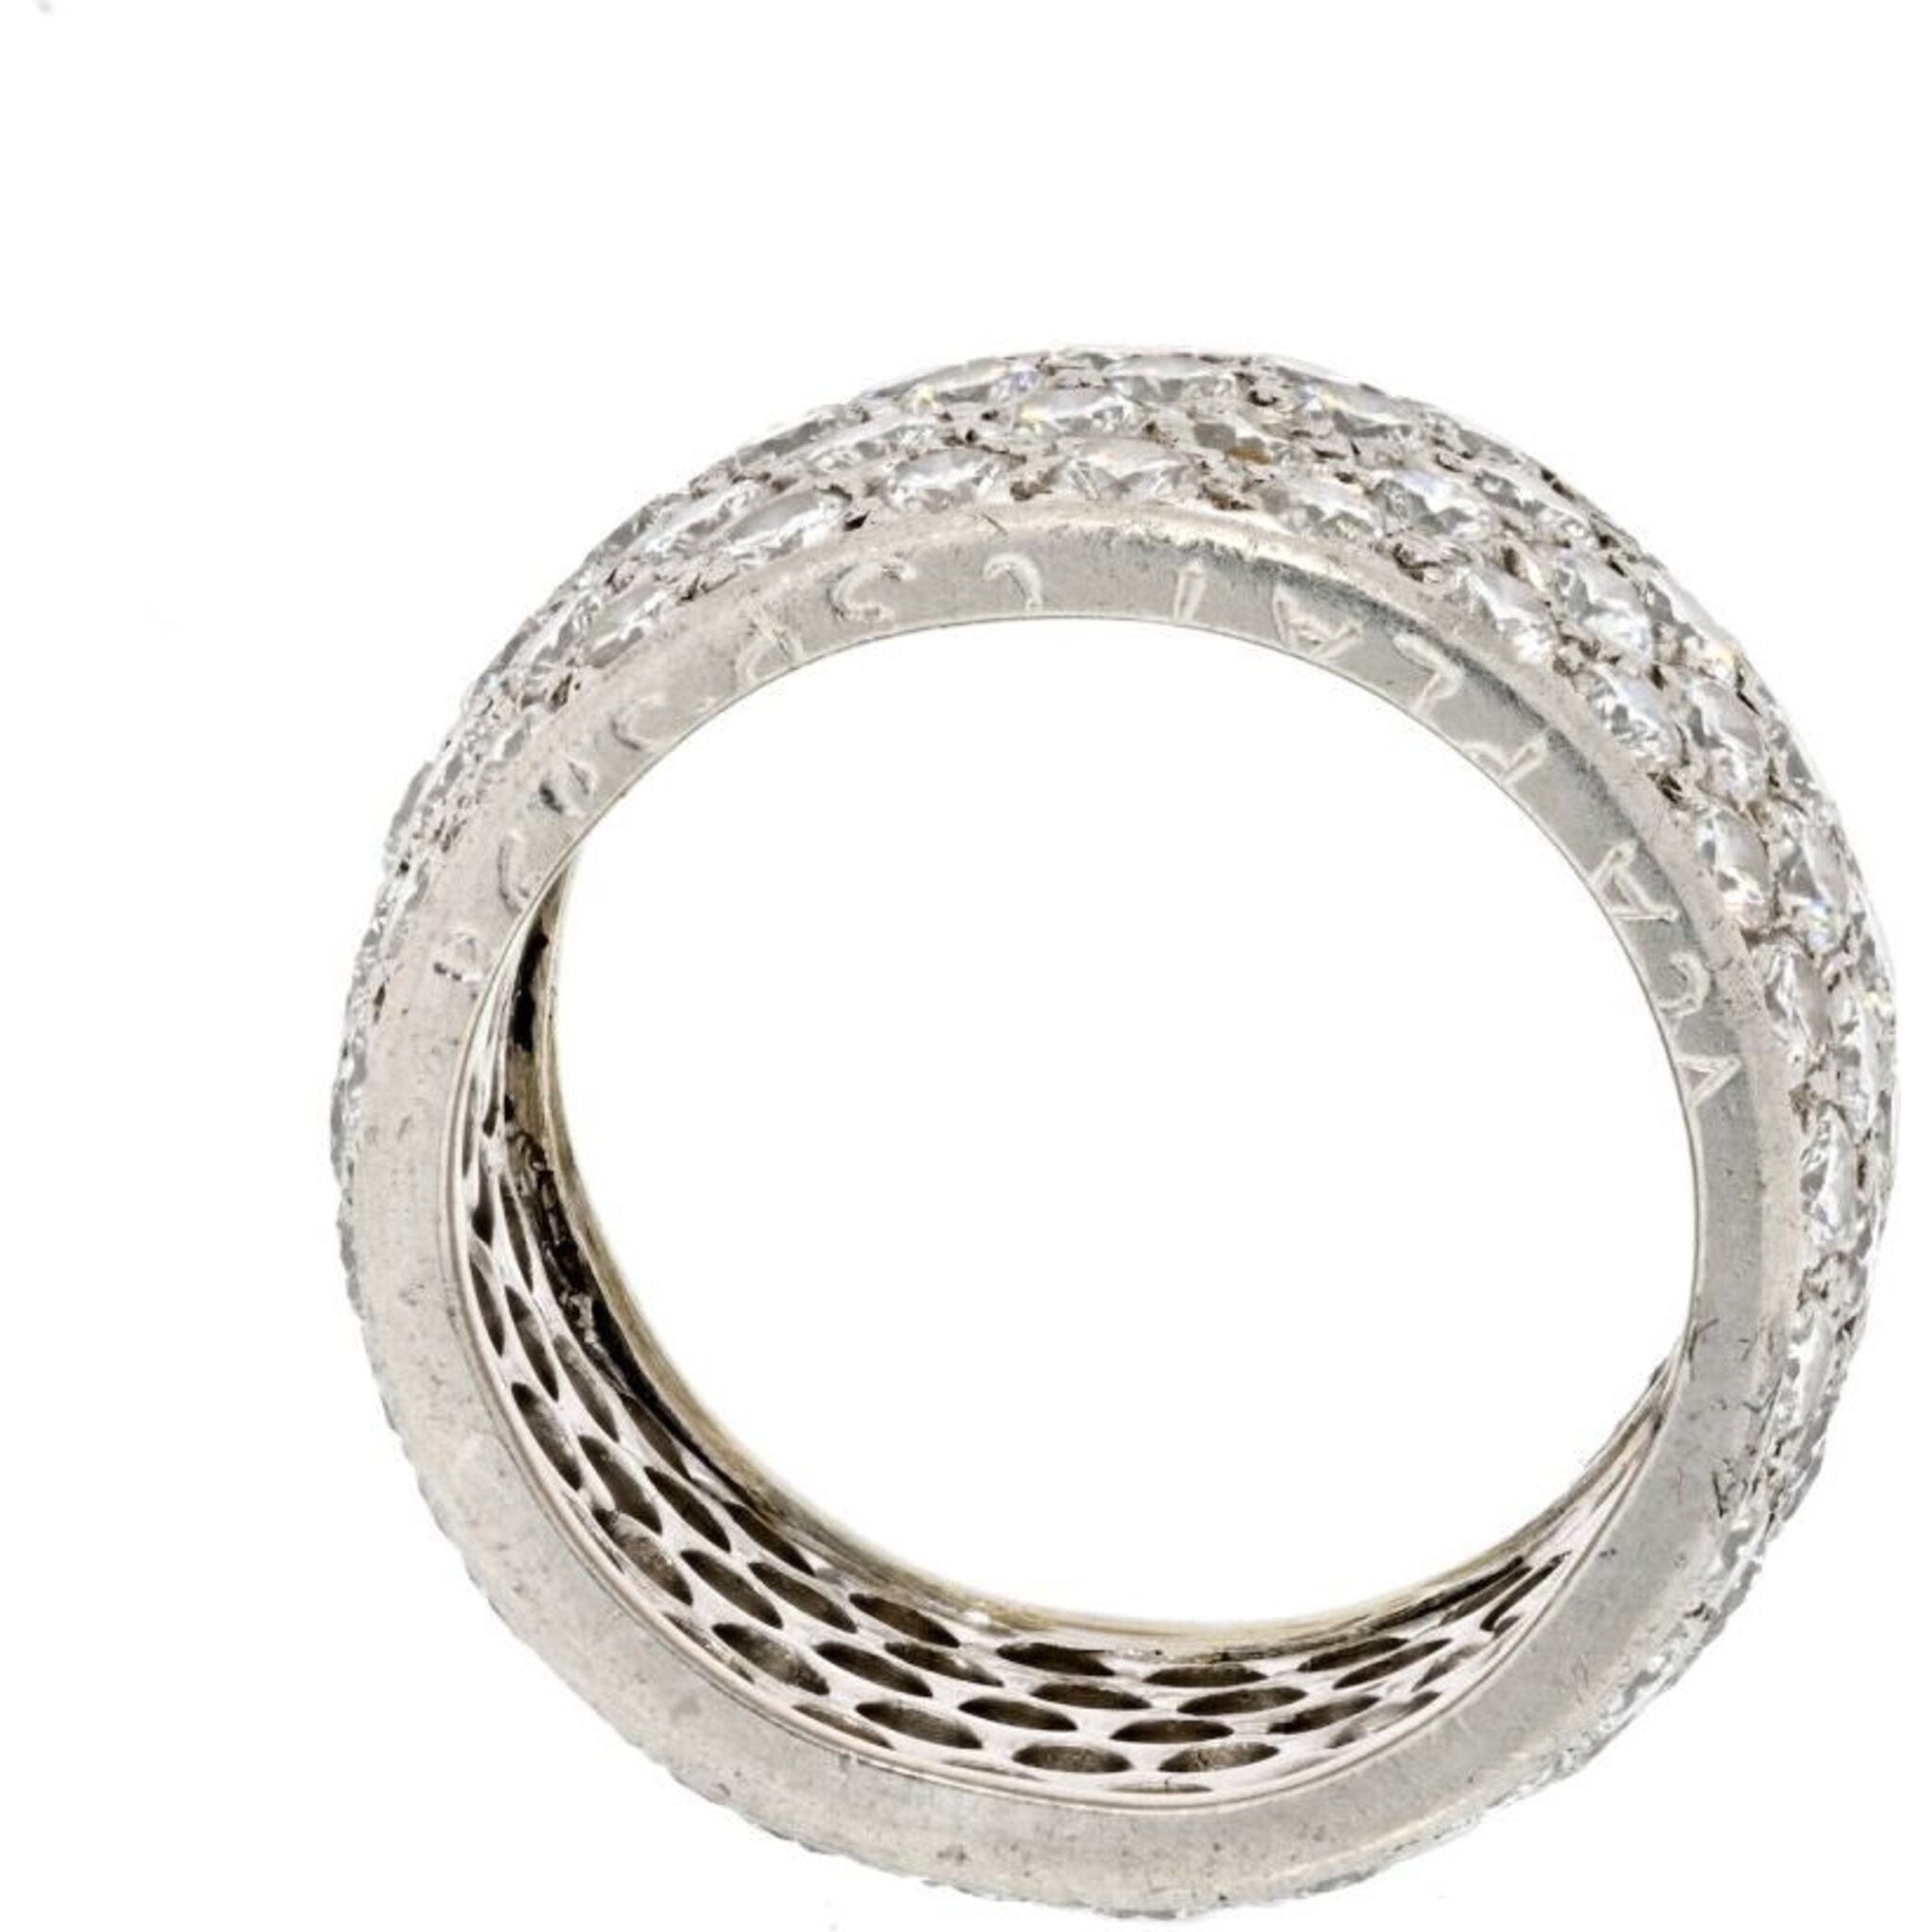 Six Prongs 5 Carat American Diamond Solitaire Ring